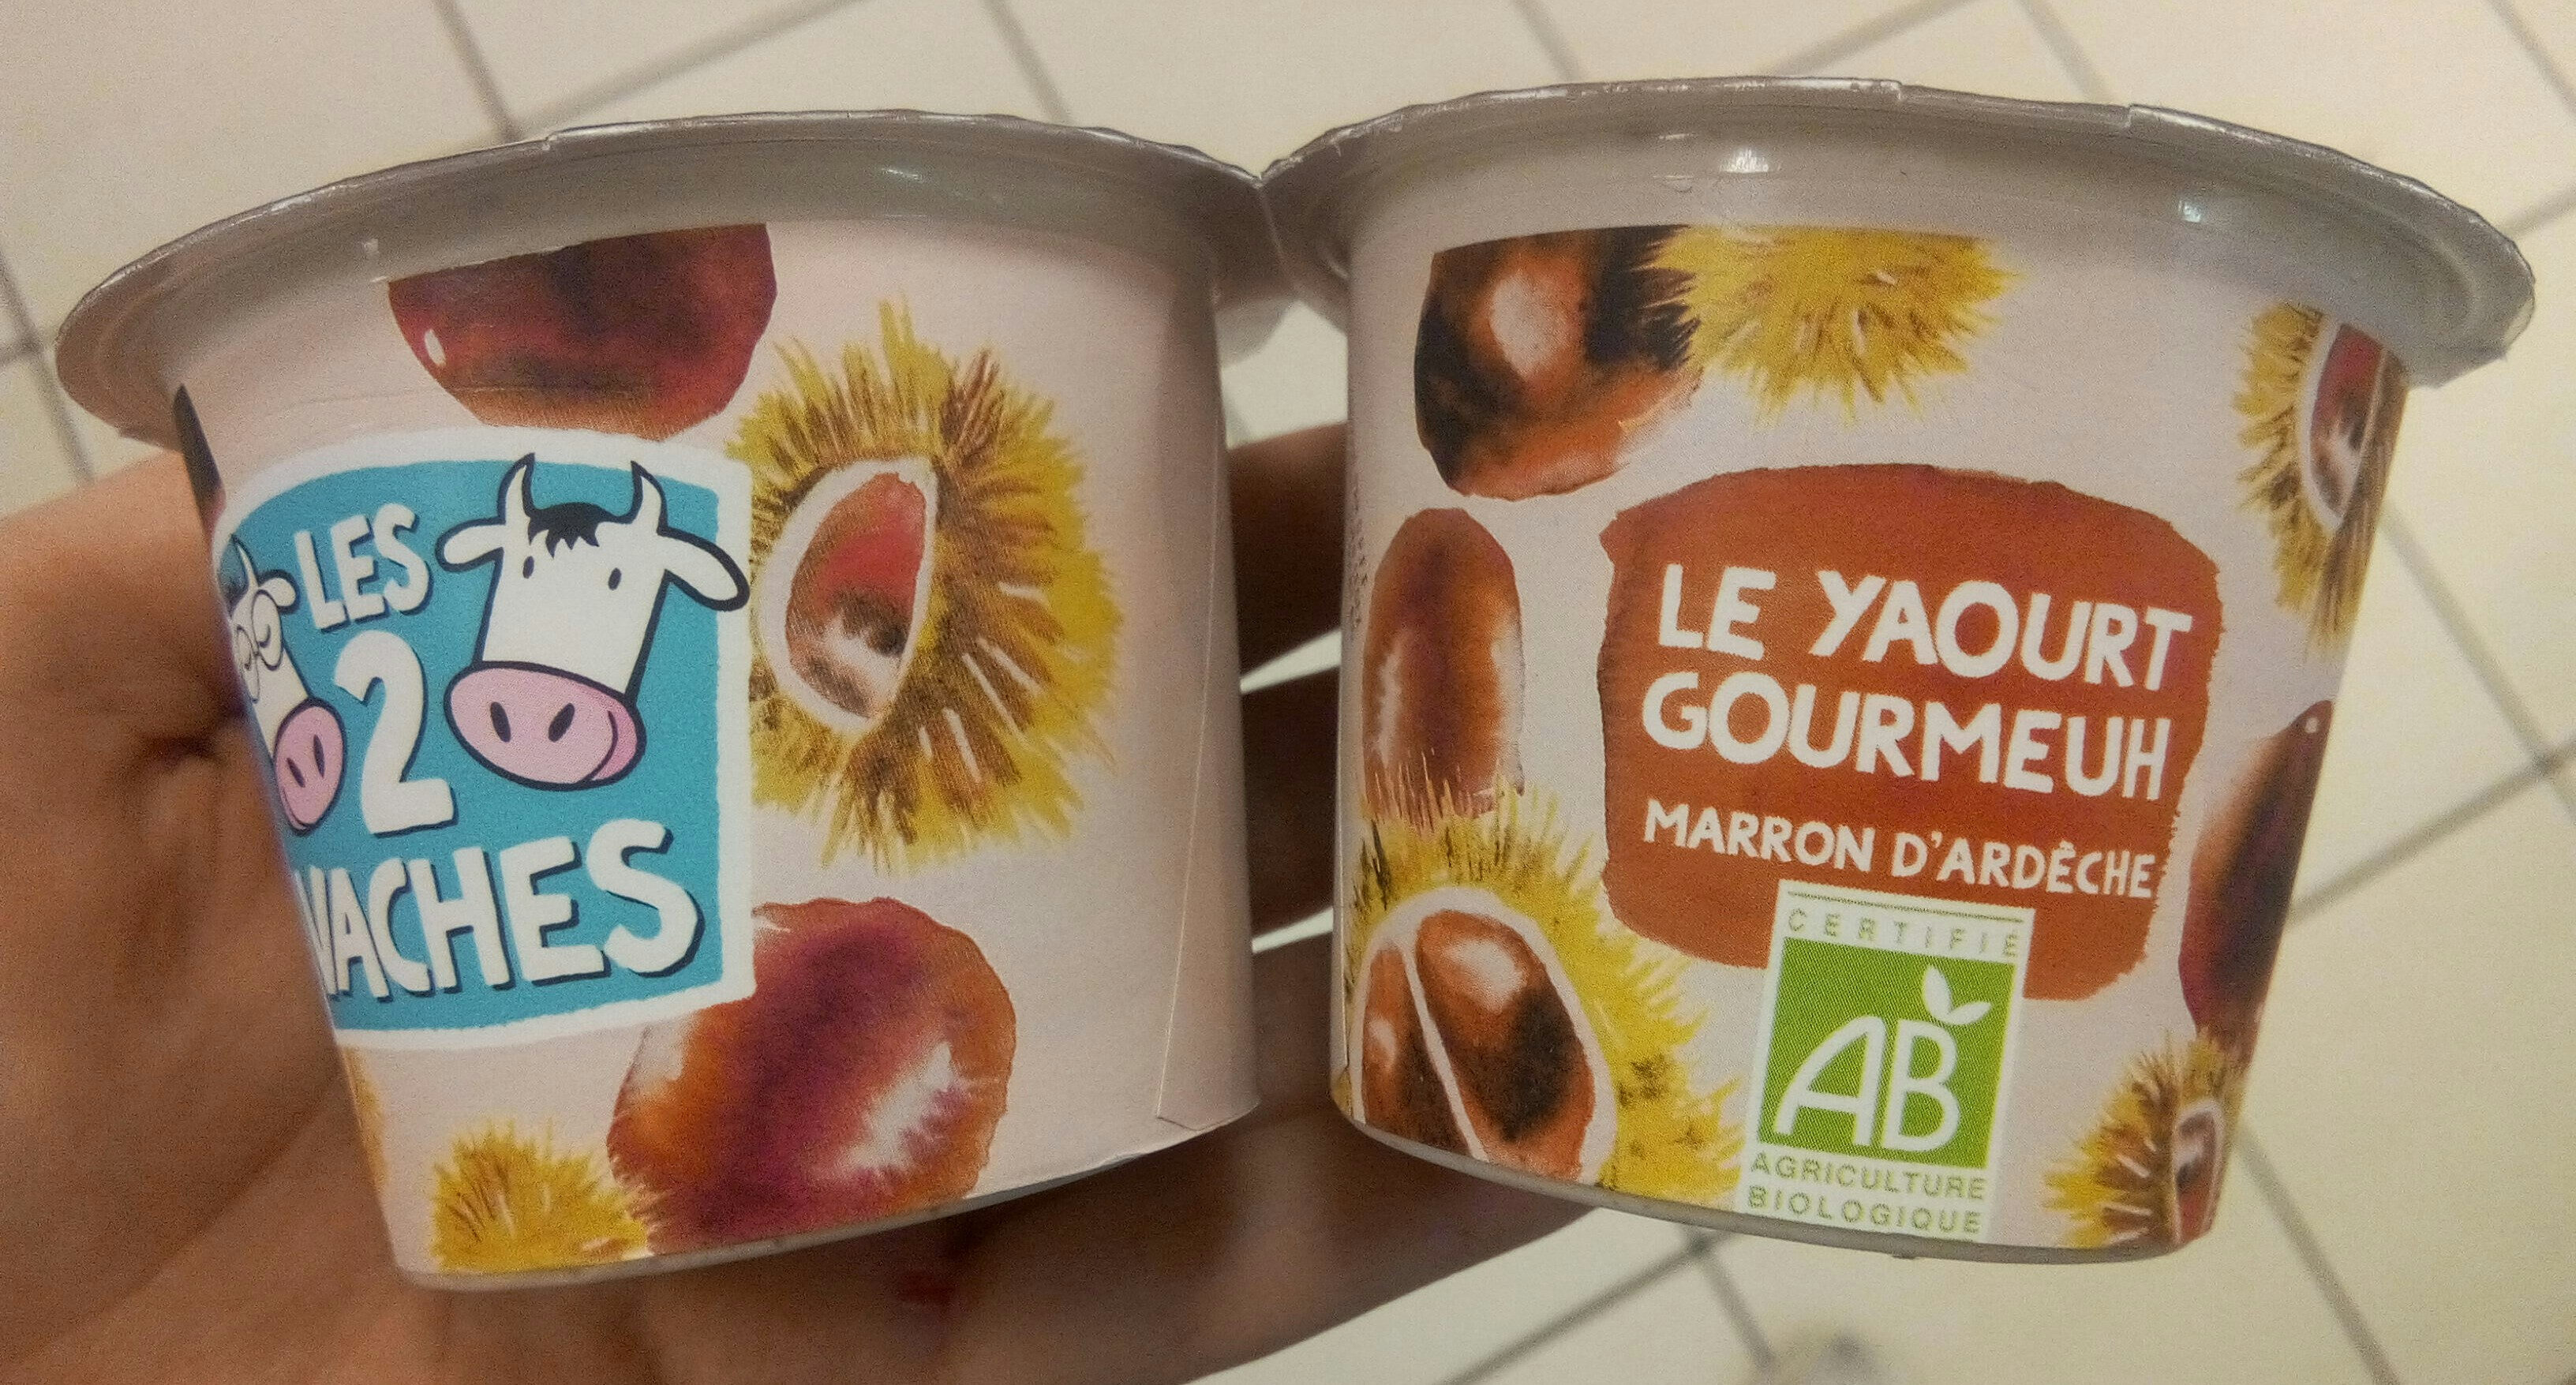 Yaourt Gourmeuh Marron d'Ardèche - Product - fr